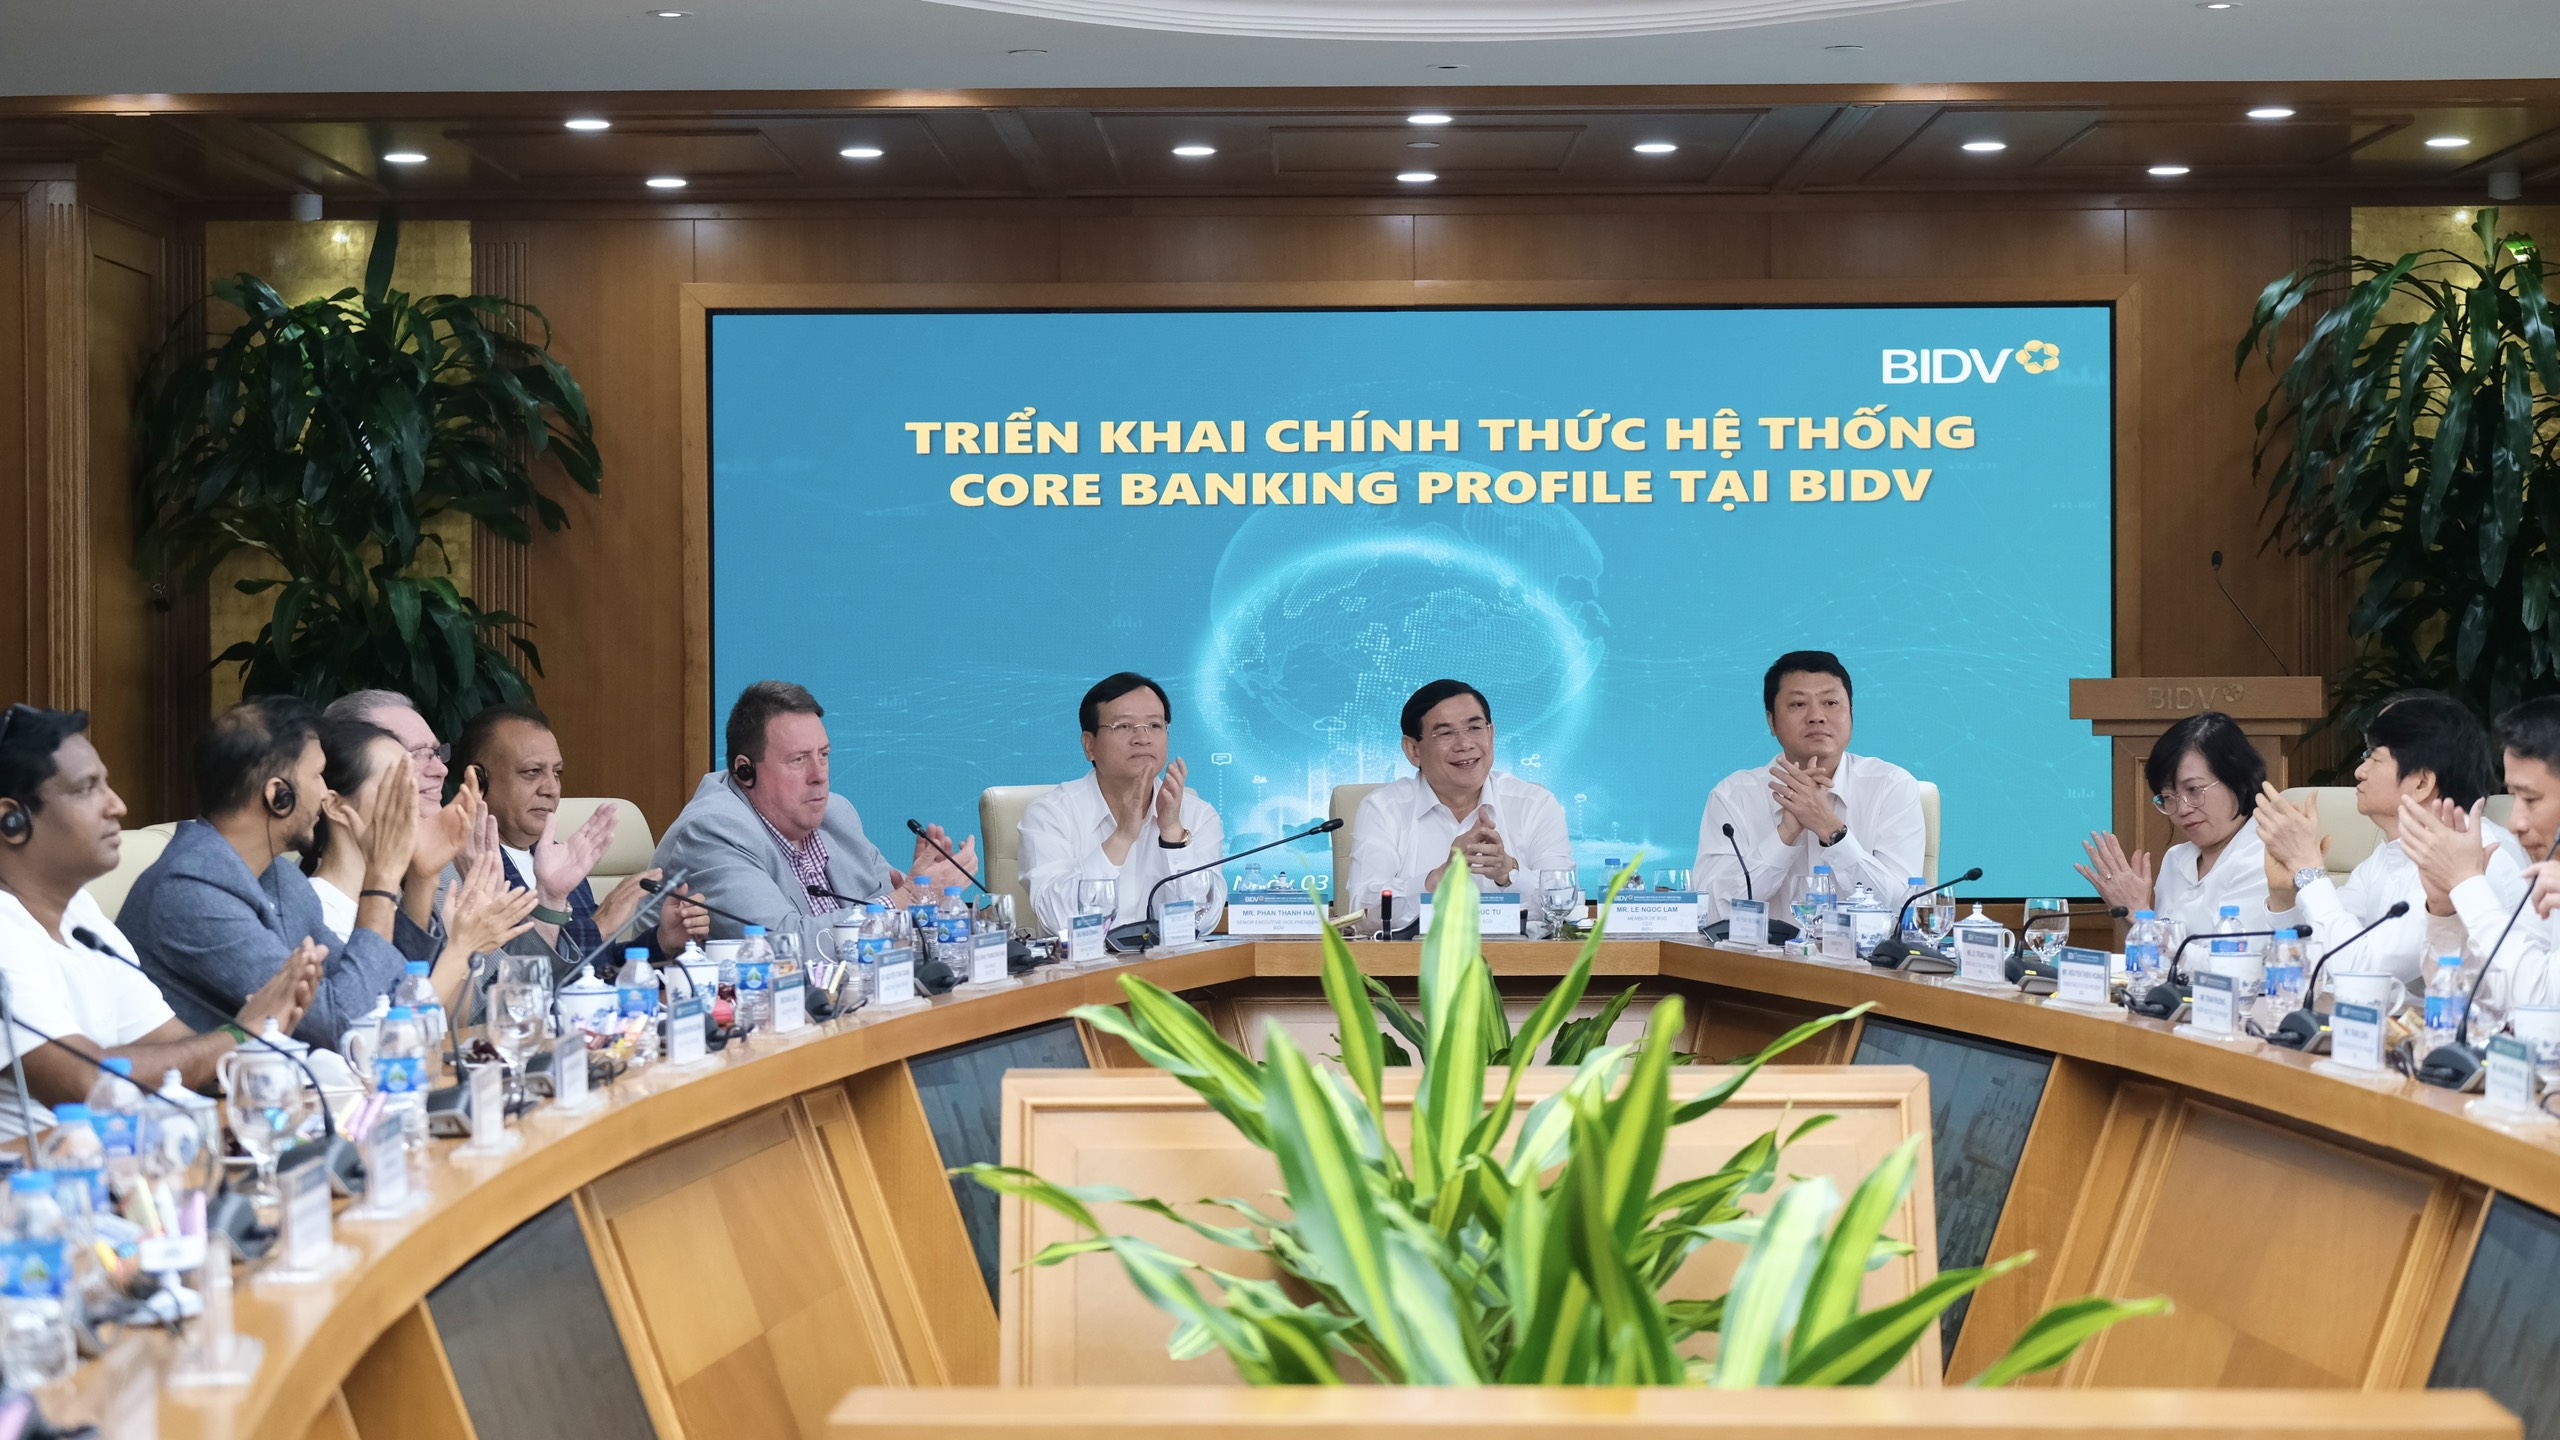 Ban Lãnh đạo BIDV họp triển khai chính thức hệ thống Core Banking Profile tại BIDV